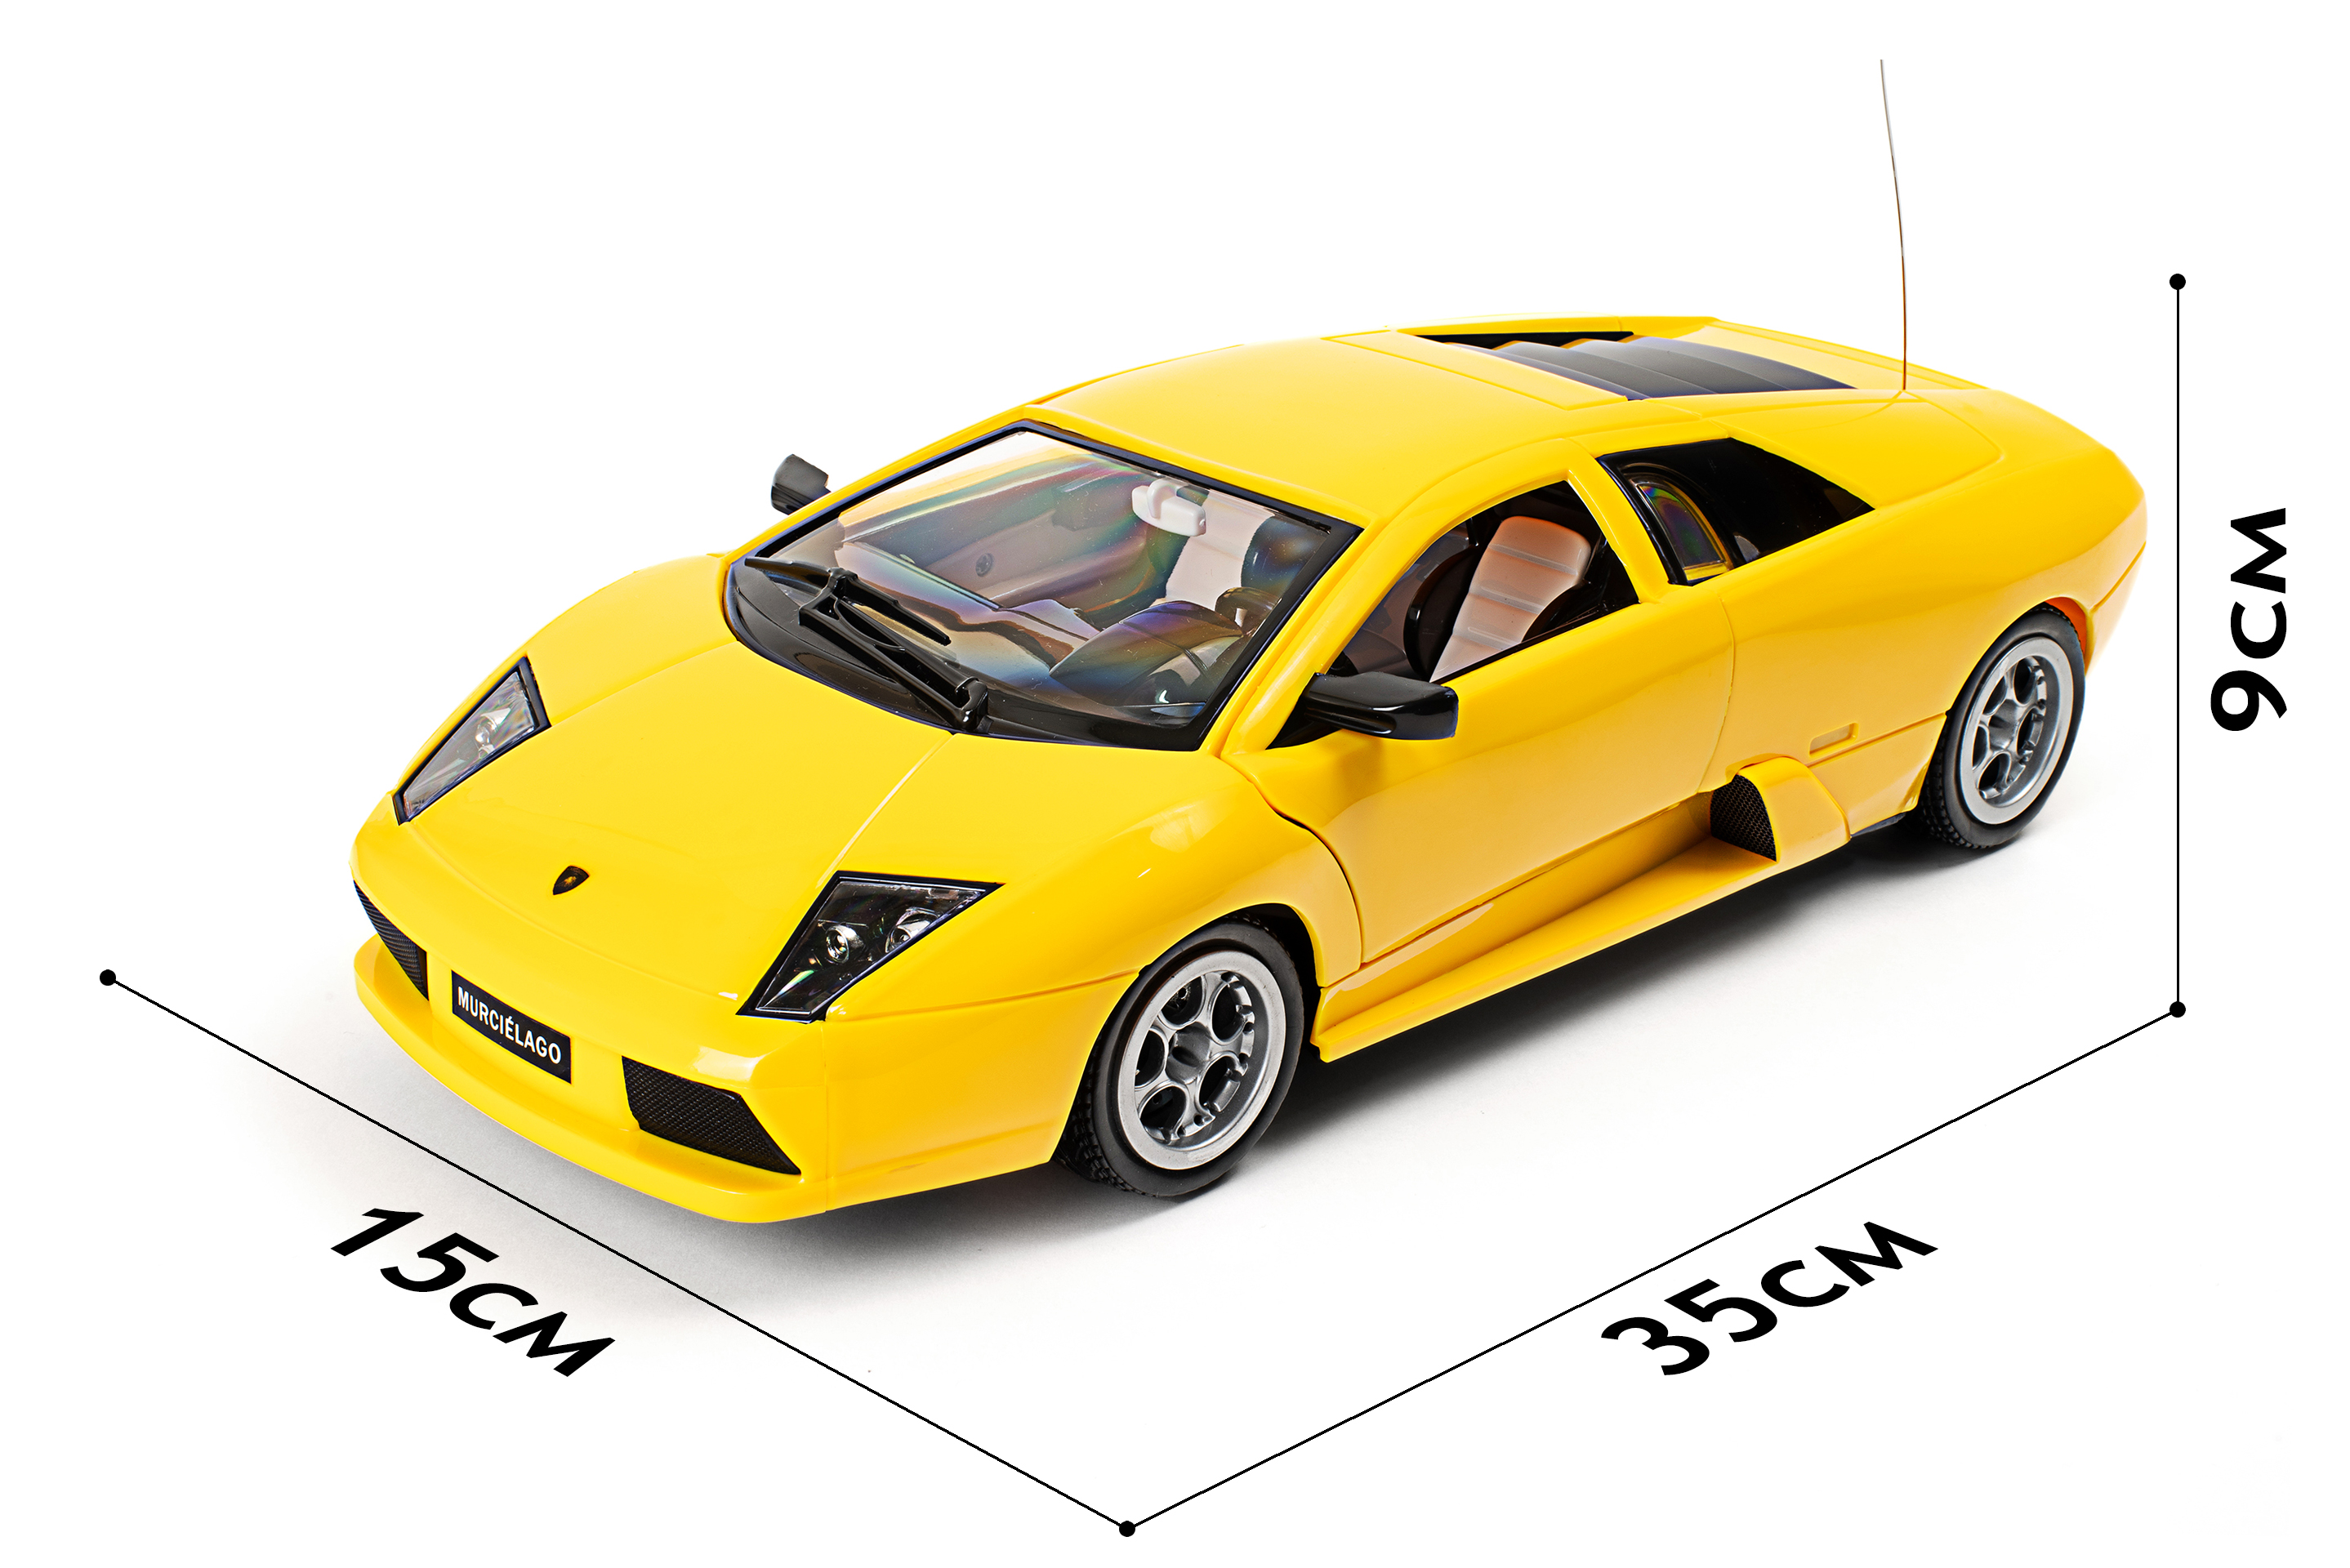 Ferngesteuertes RC Auto Kinder Spielzeug Geschenk Lamborghini Murcielago 34 cm